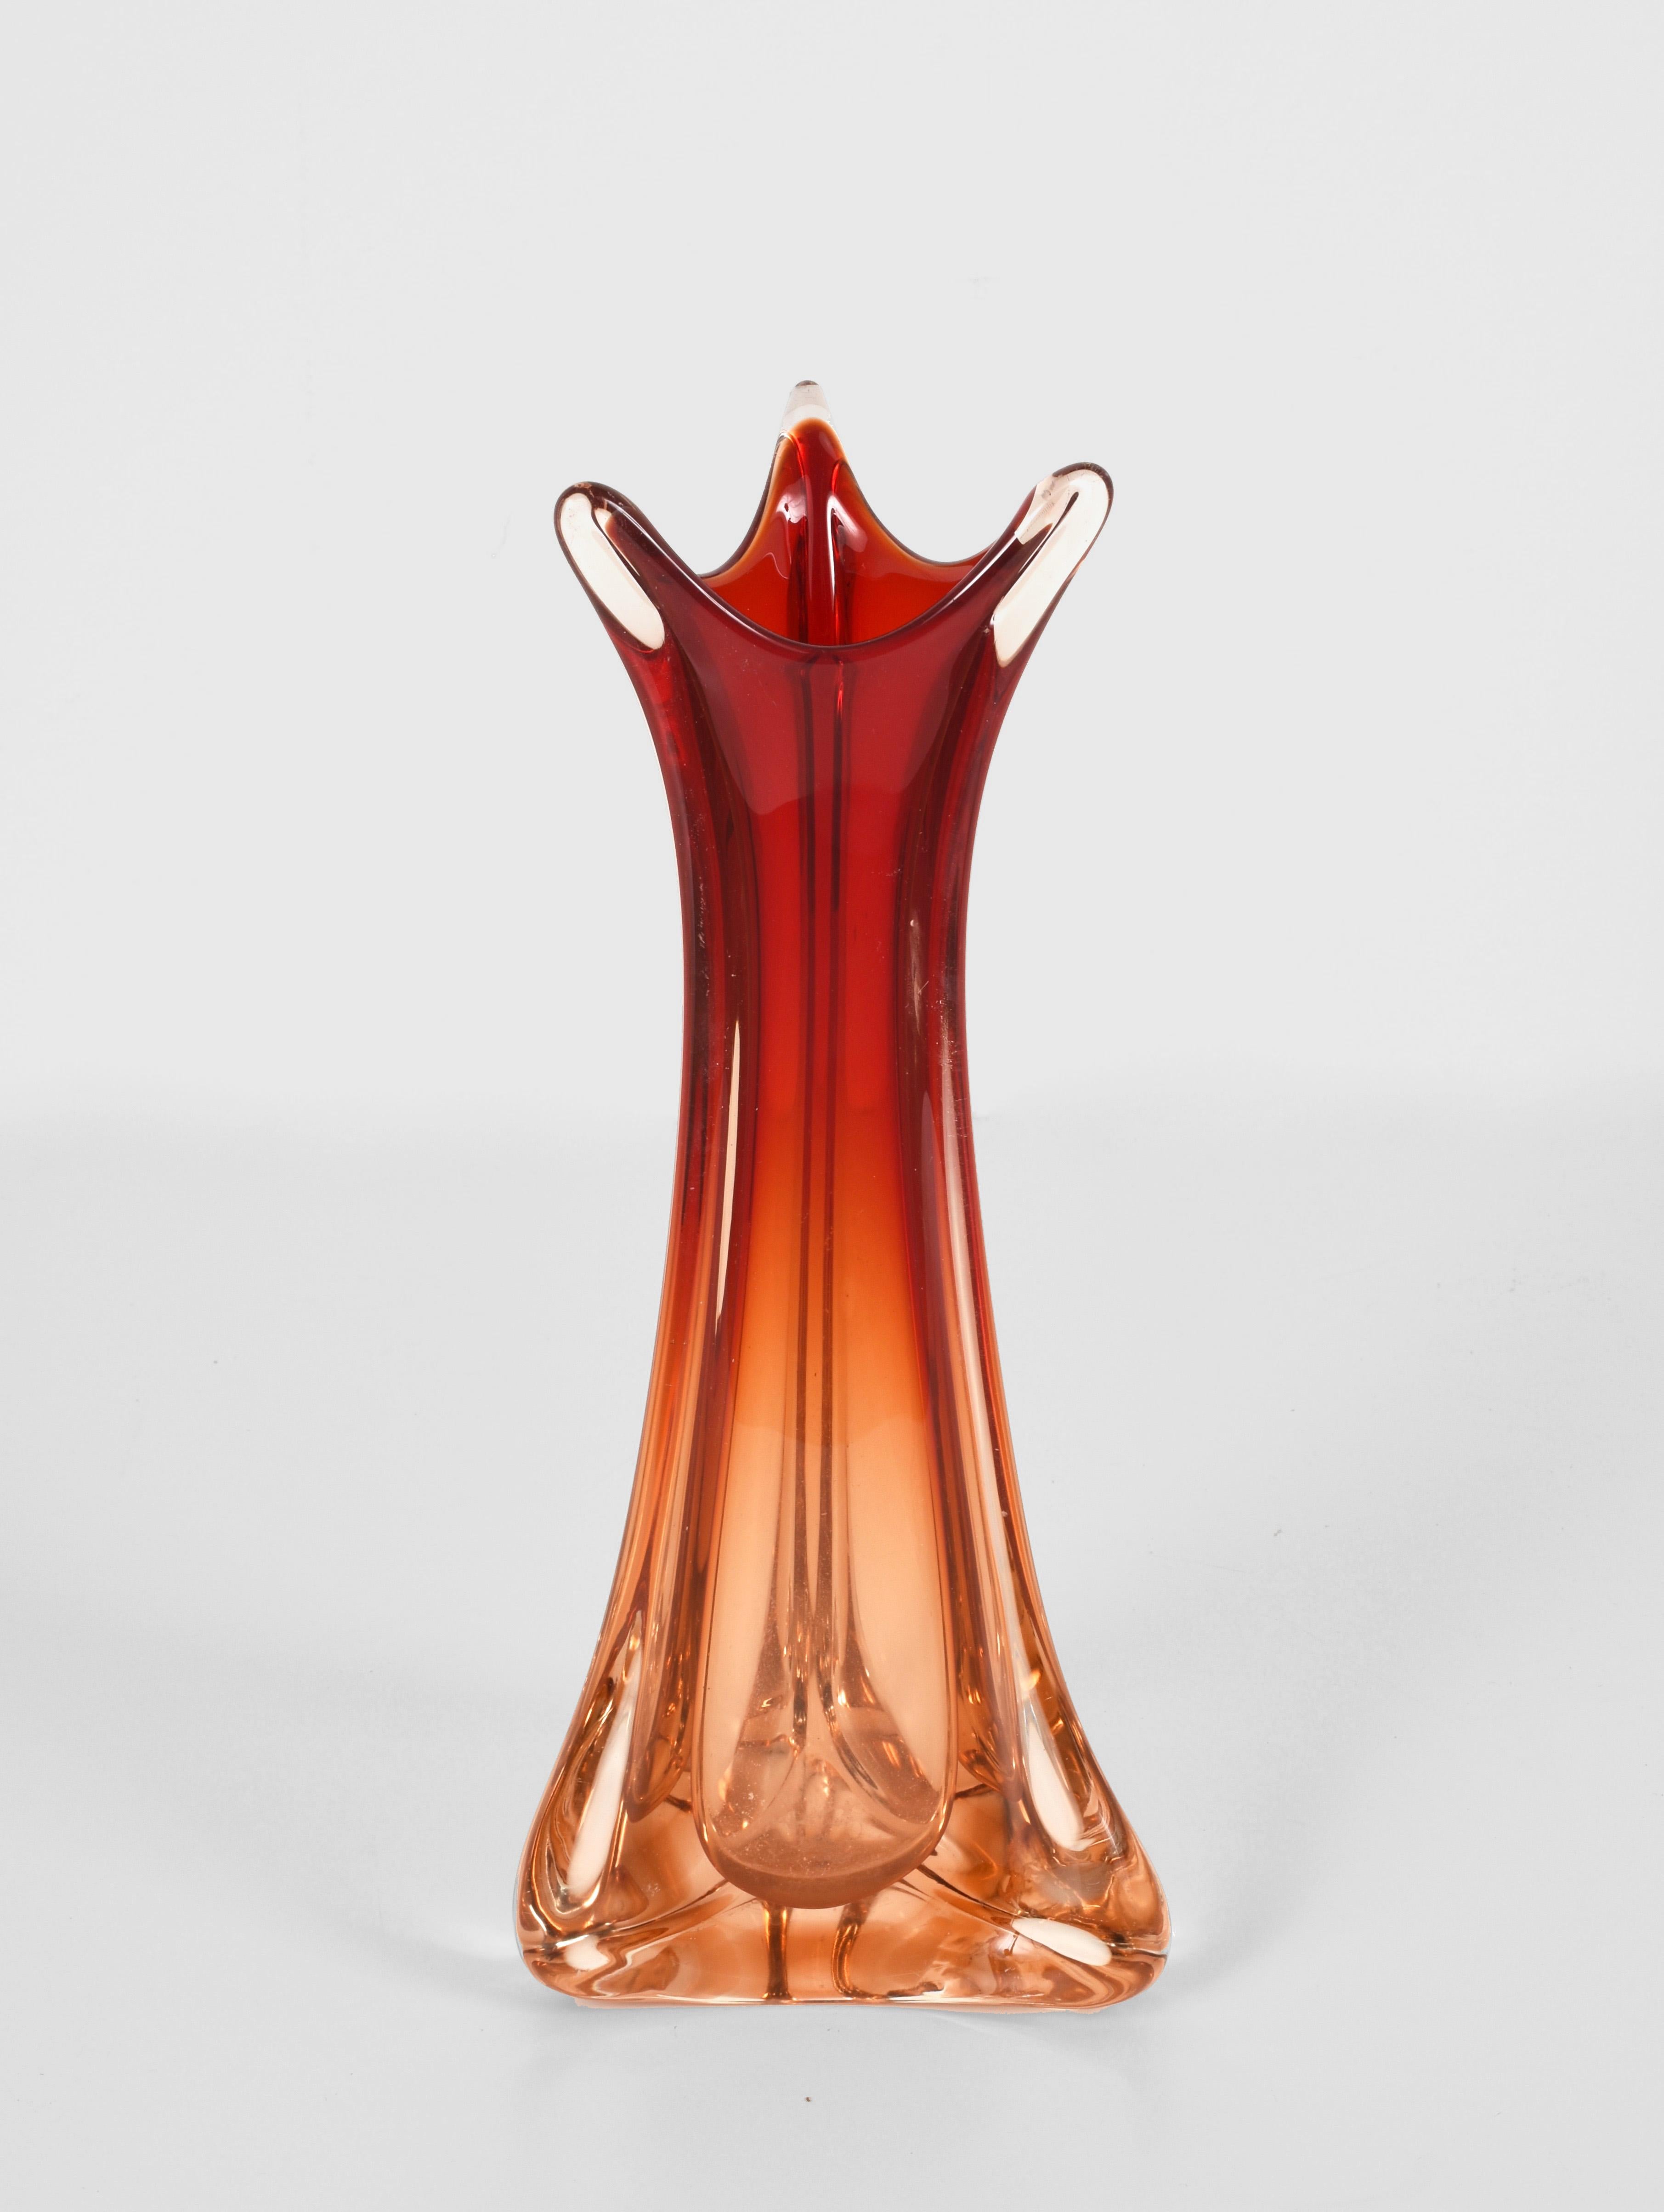 Italian Murano Rosso Murano Glass Vase, Midcentury Attributed to Flavio Poli Italy 1950s